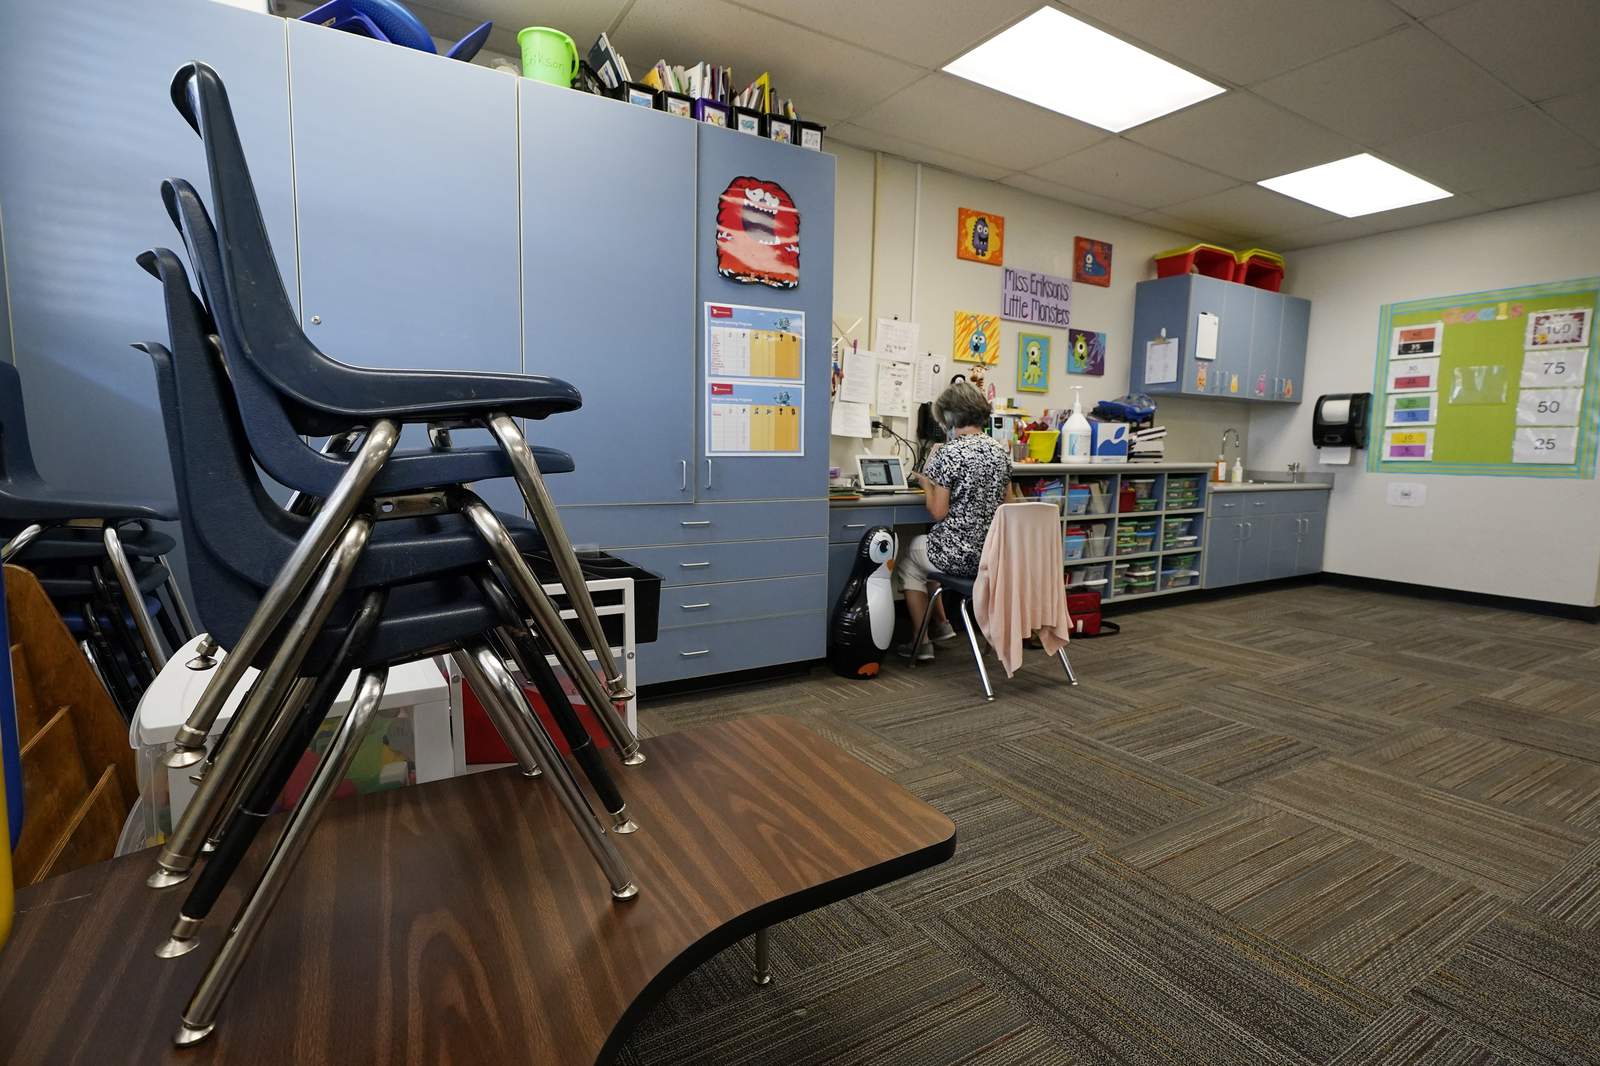 Bexar County’s school districts won’t close schools despite health department recommendation to go virtual